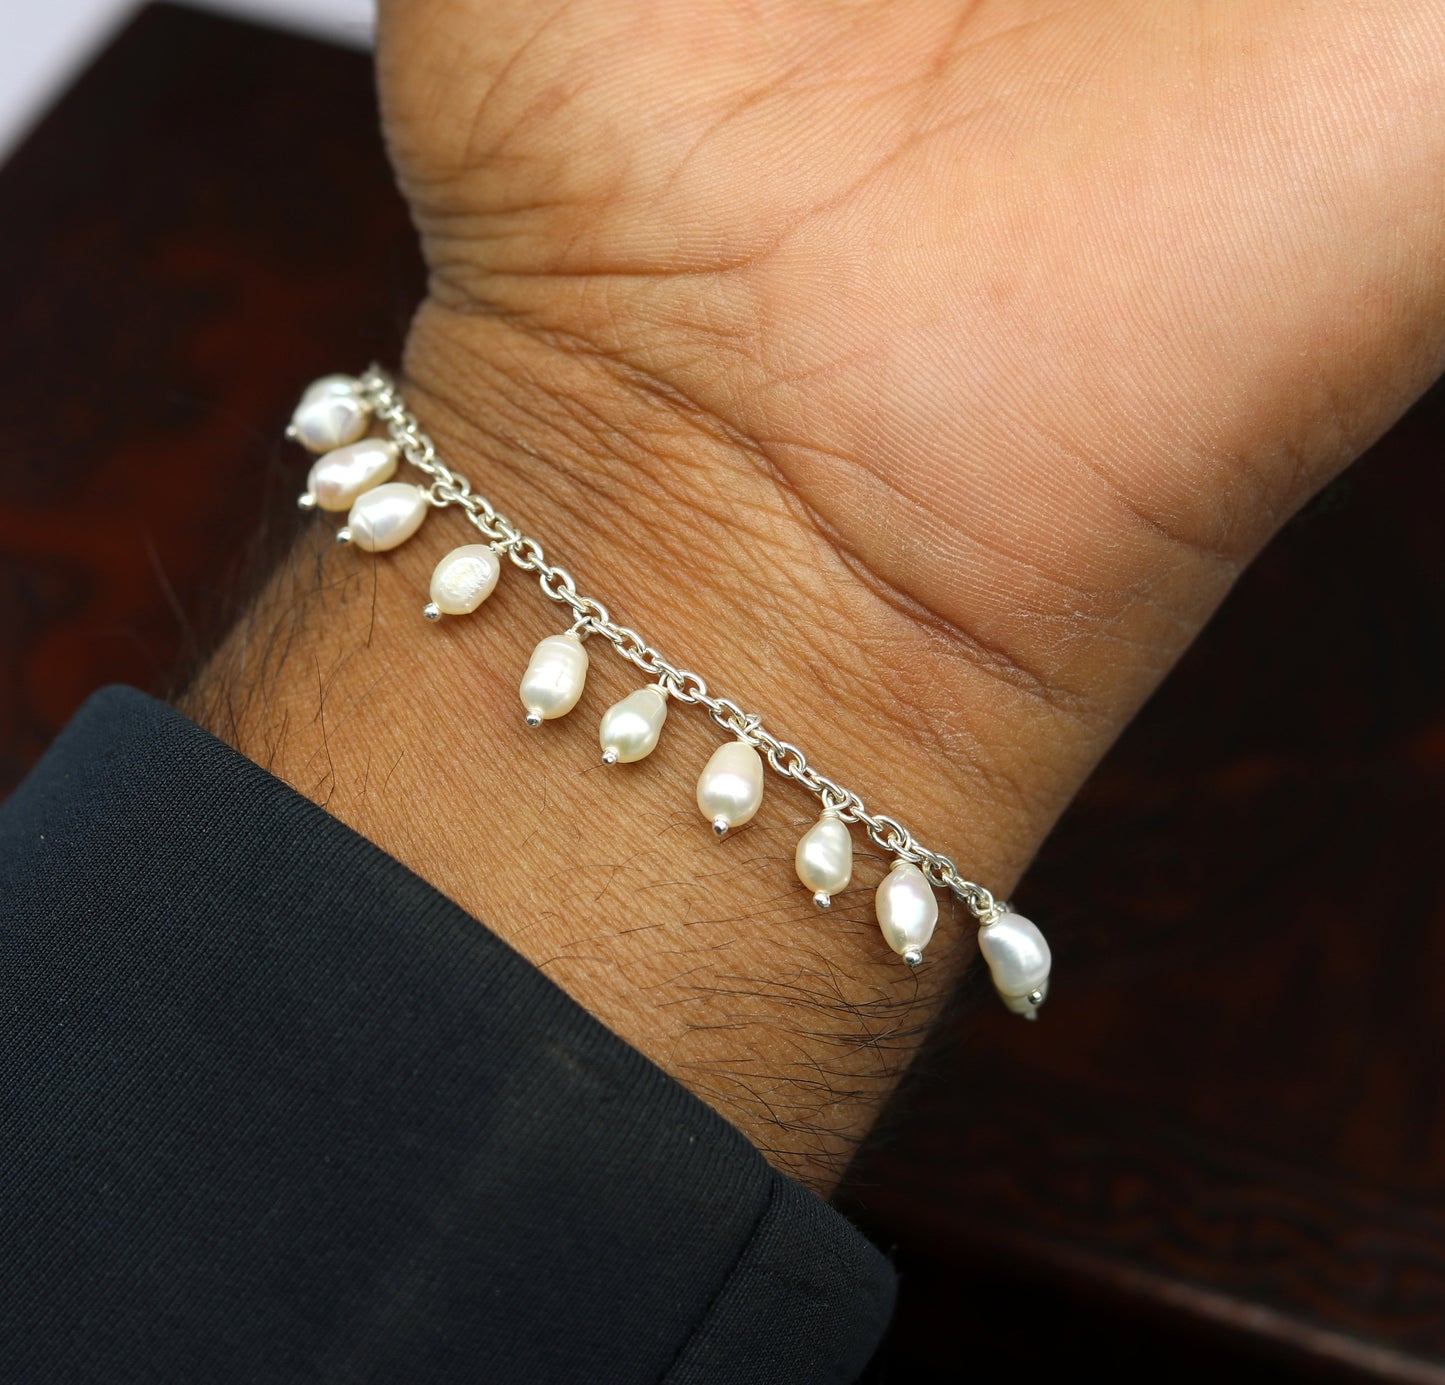 925 sterling silver handmade customized charm bracelet, amazing stylish pearl bracelet unisex gifting jewelry belly dance jewelry nsbr192 - TRIBAL ORNAMENTS